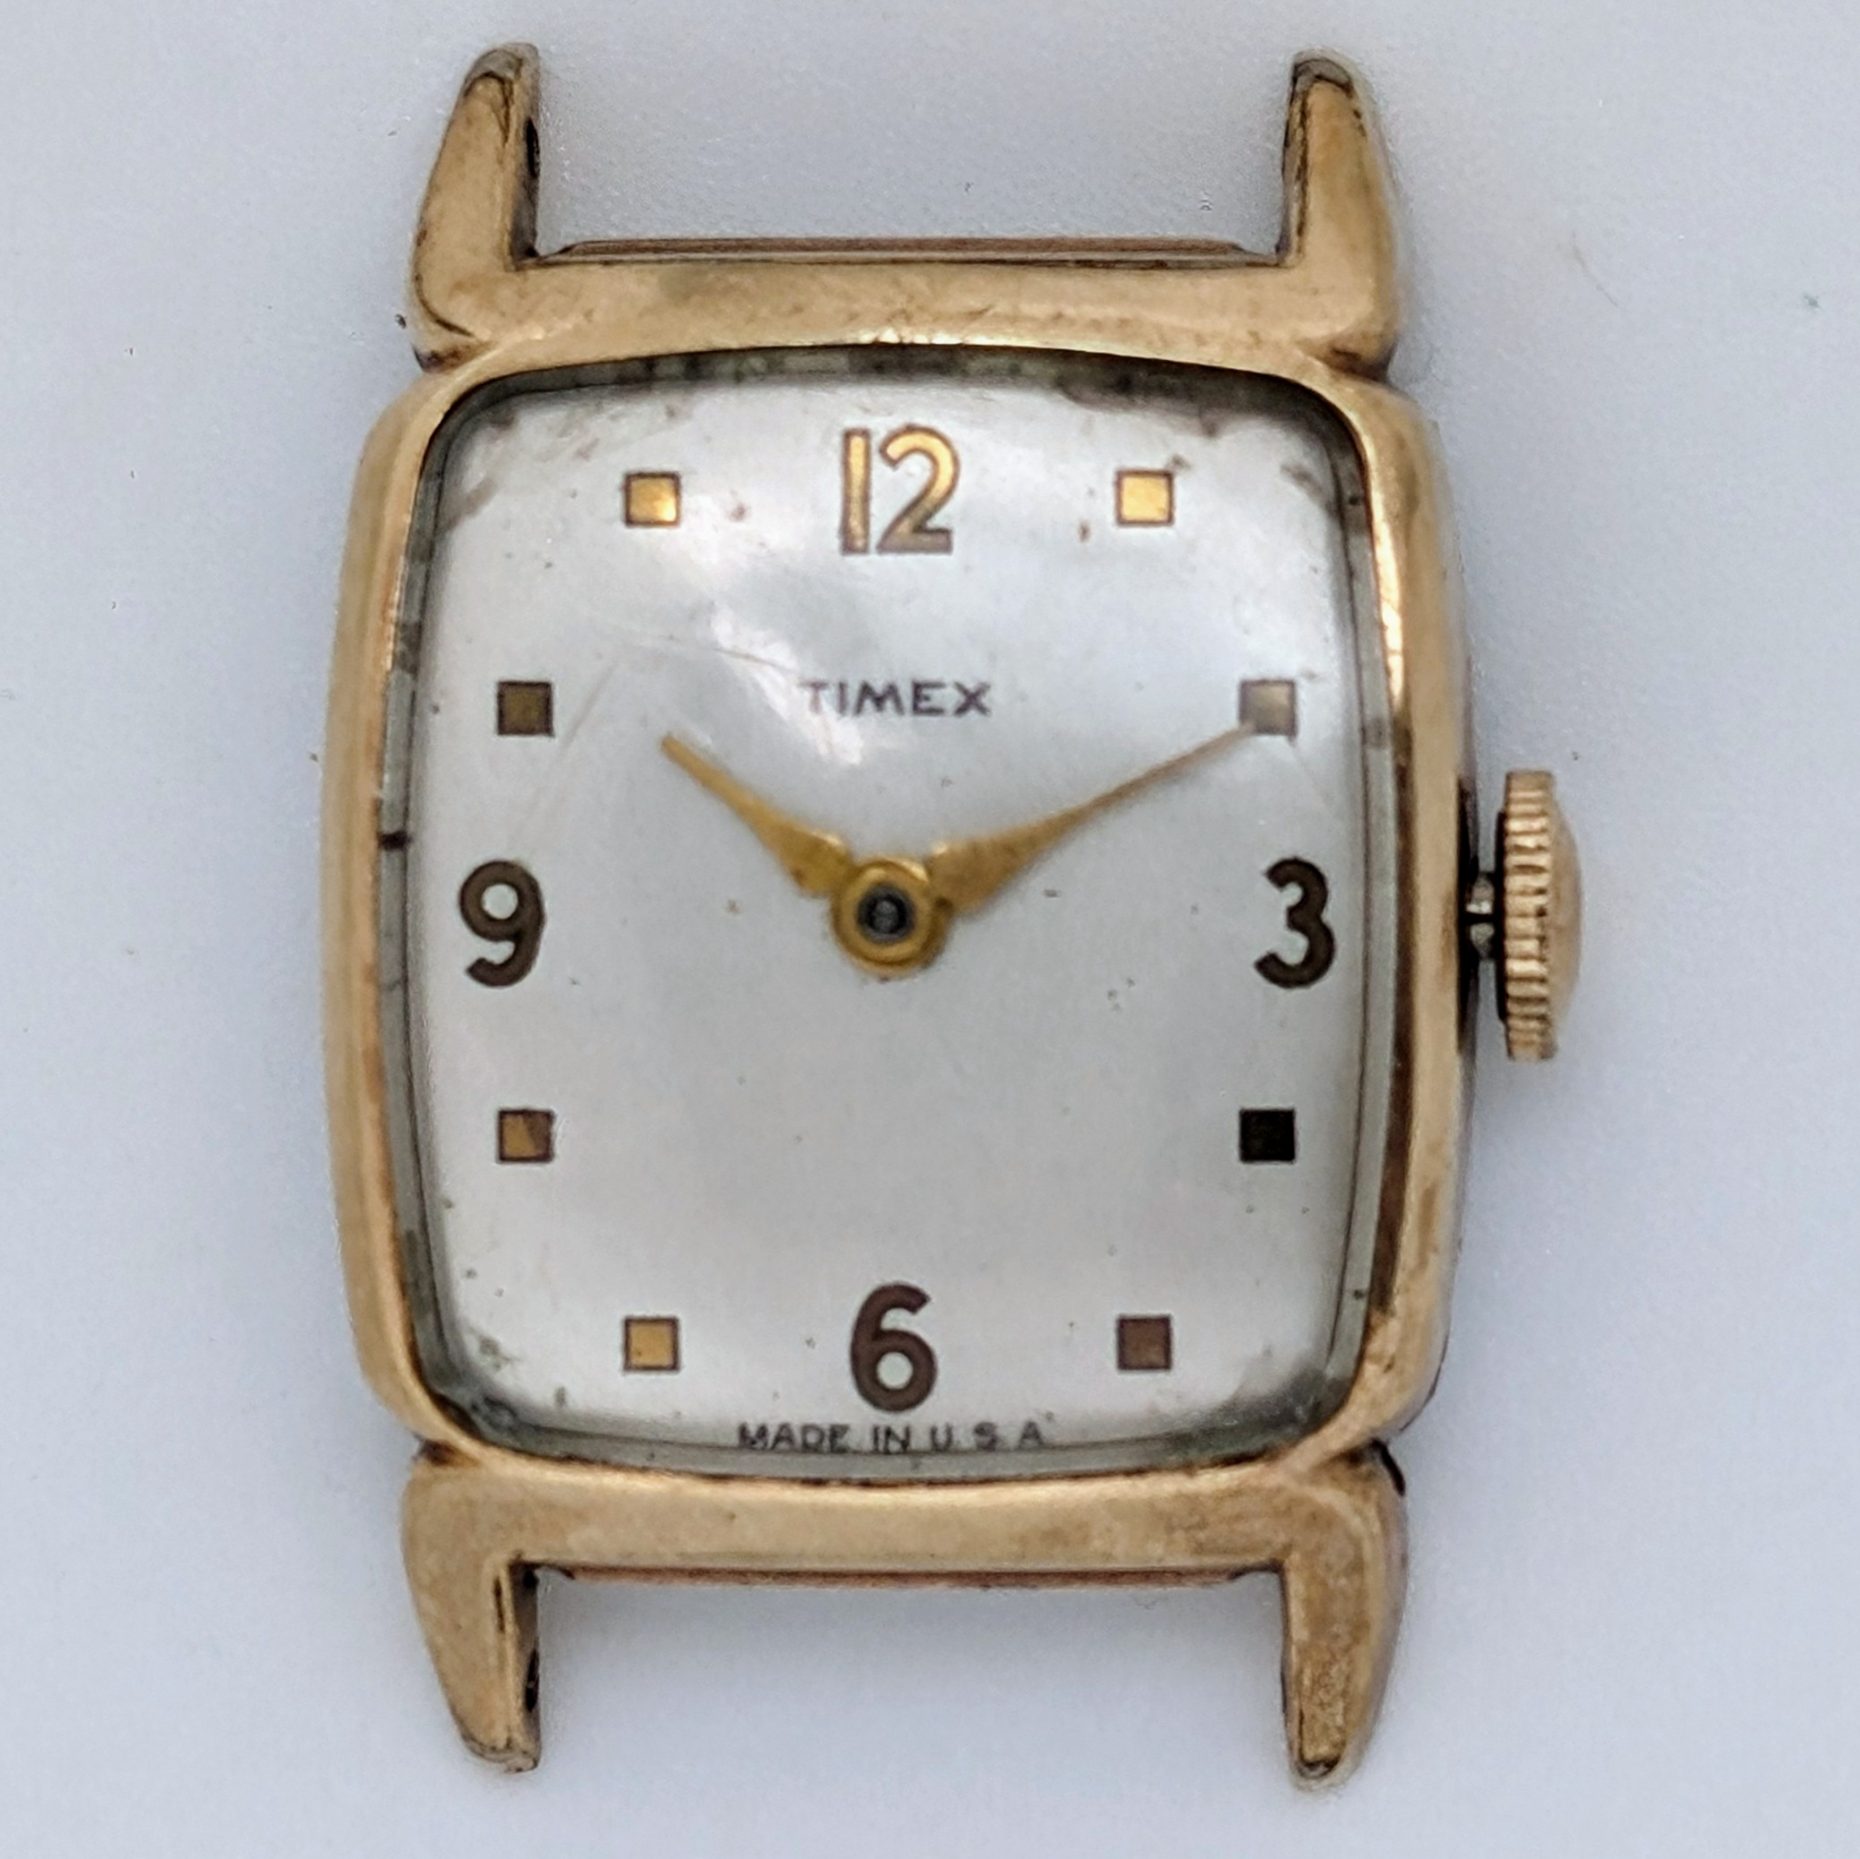 Timex Model D 1949 watch